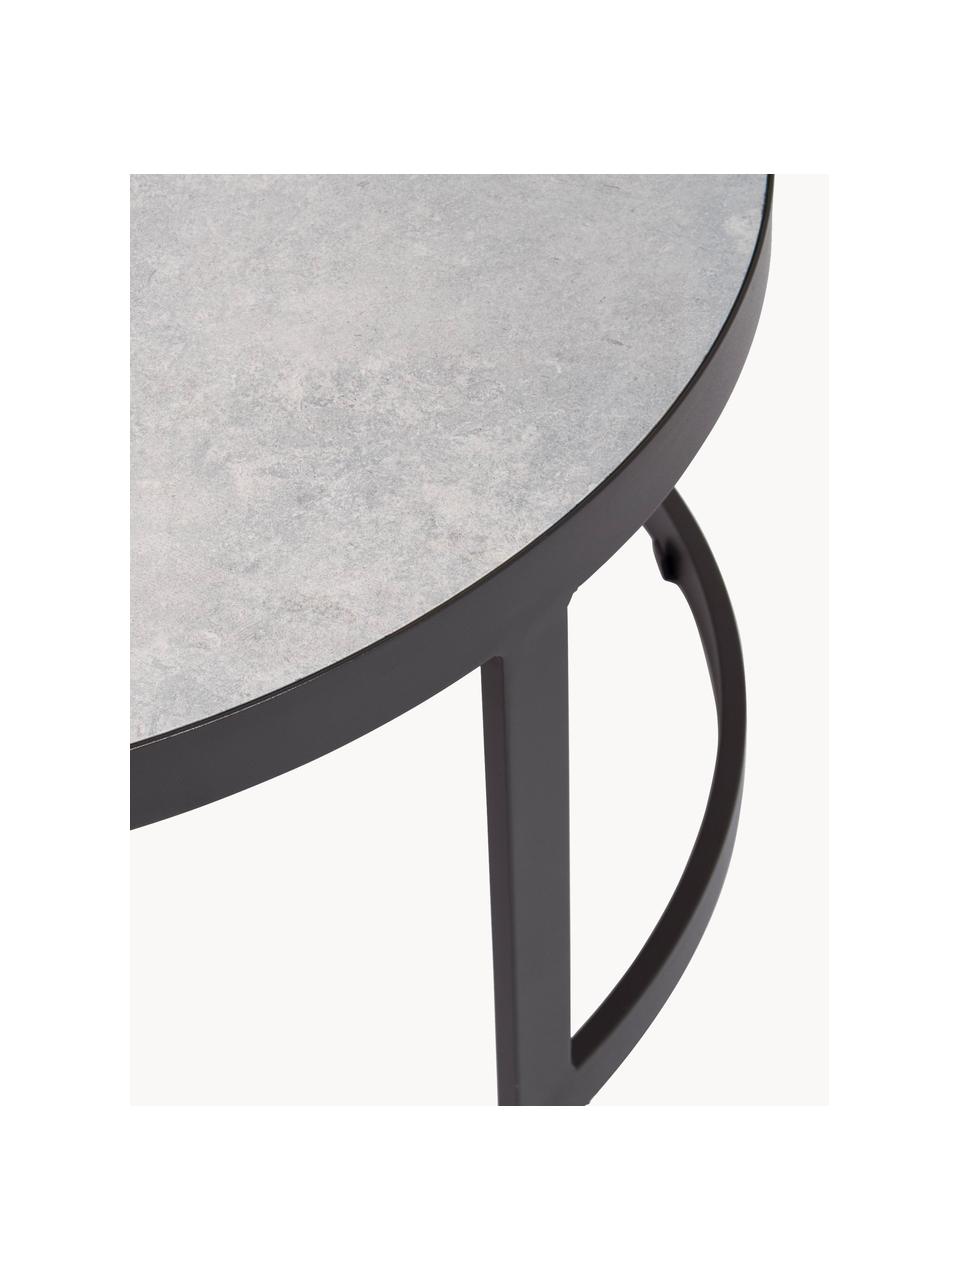 Set de mesas redondas para exterior Jacob, 2 uds.., Tablero: cerámica, Estructura: aluminio, con pintura en , Tonos grises, gris antracita, Set de diferentes tamaños